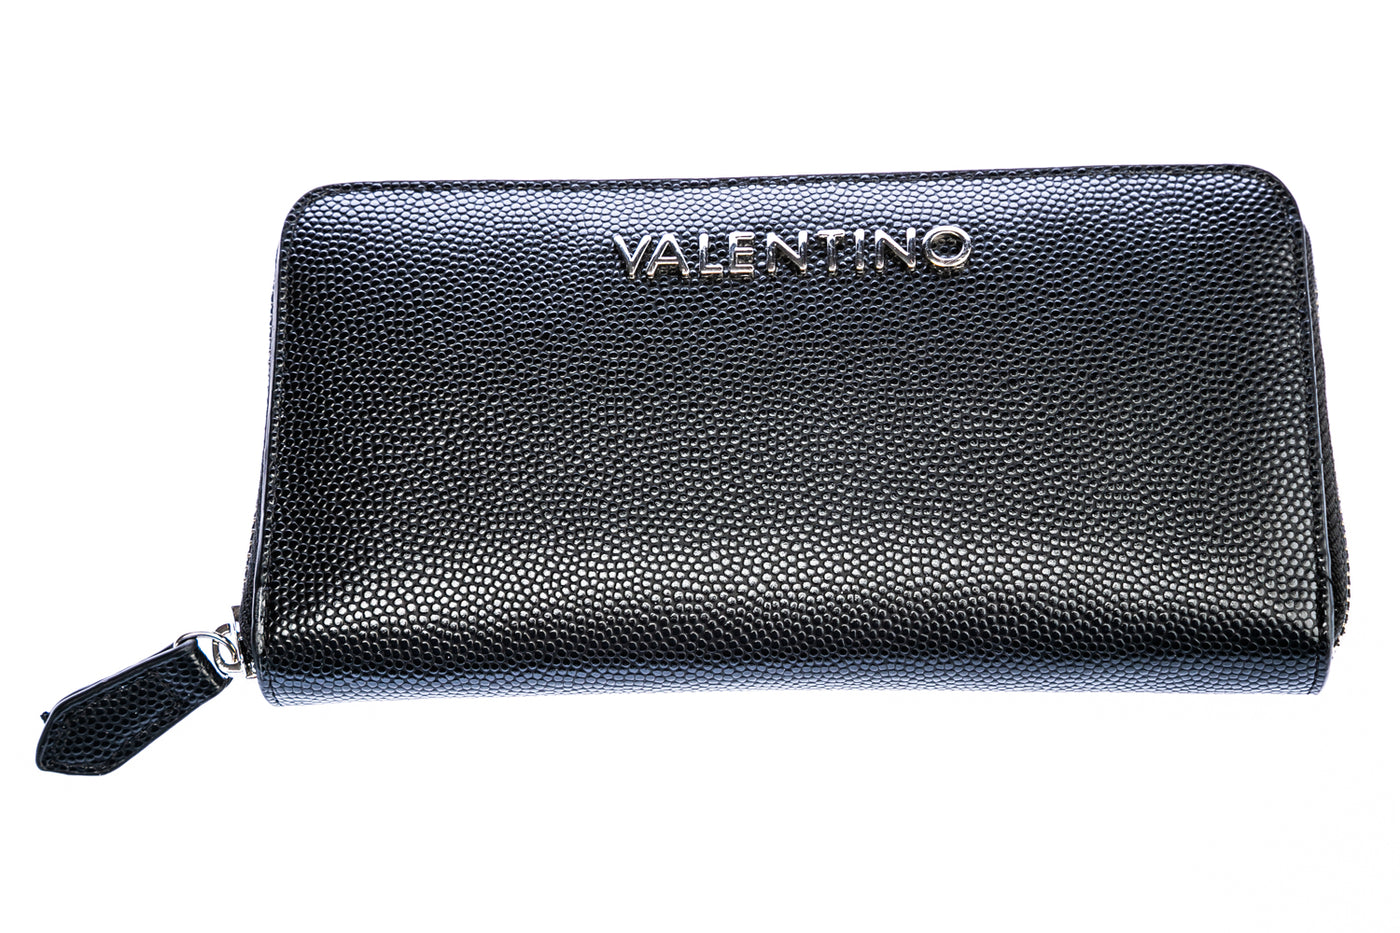 Valentino by Mario Valentino Divina Ladies Purse in Black